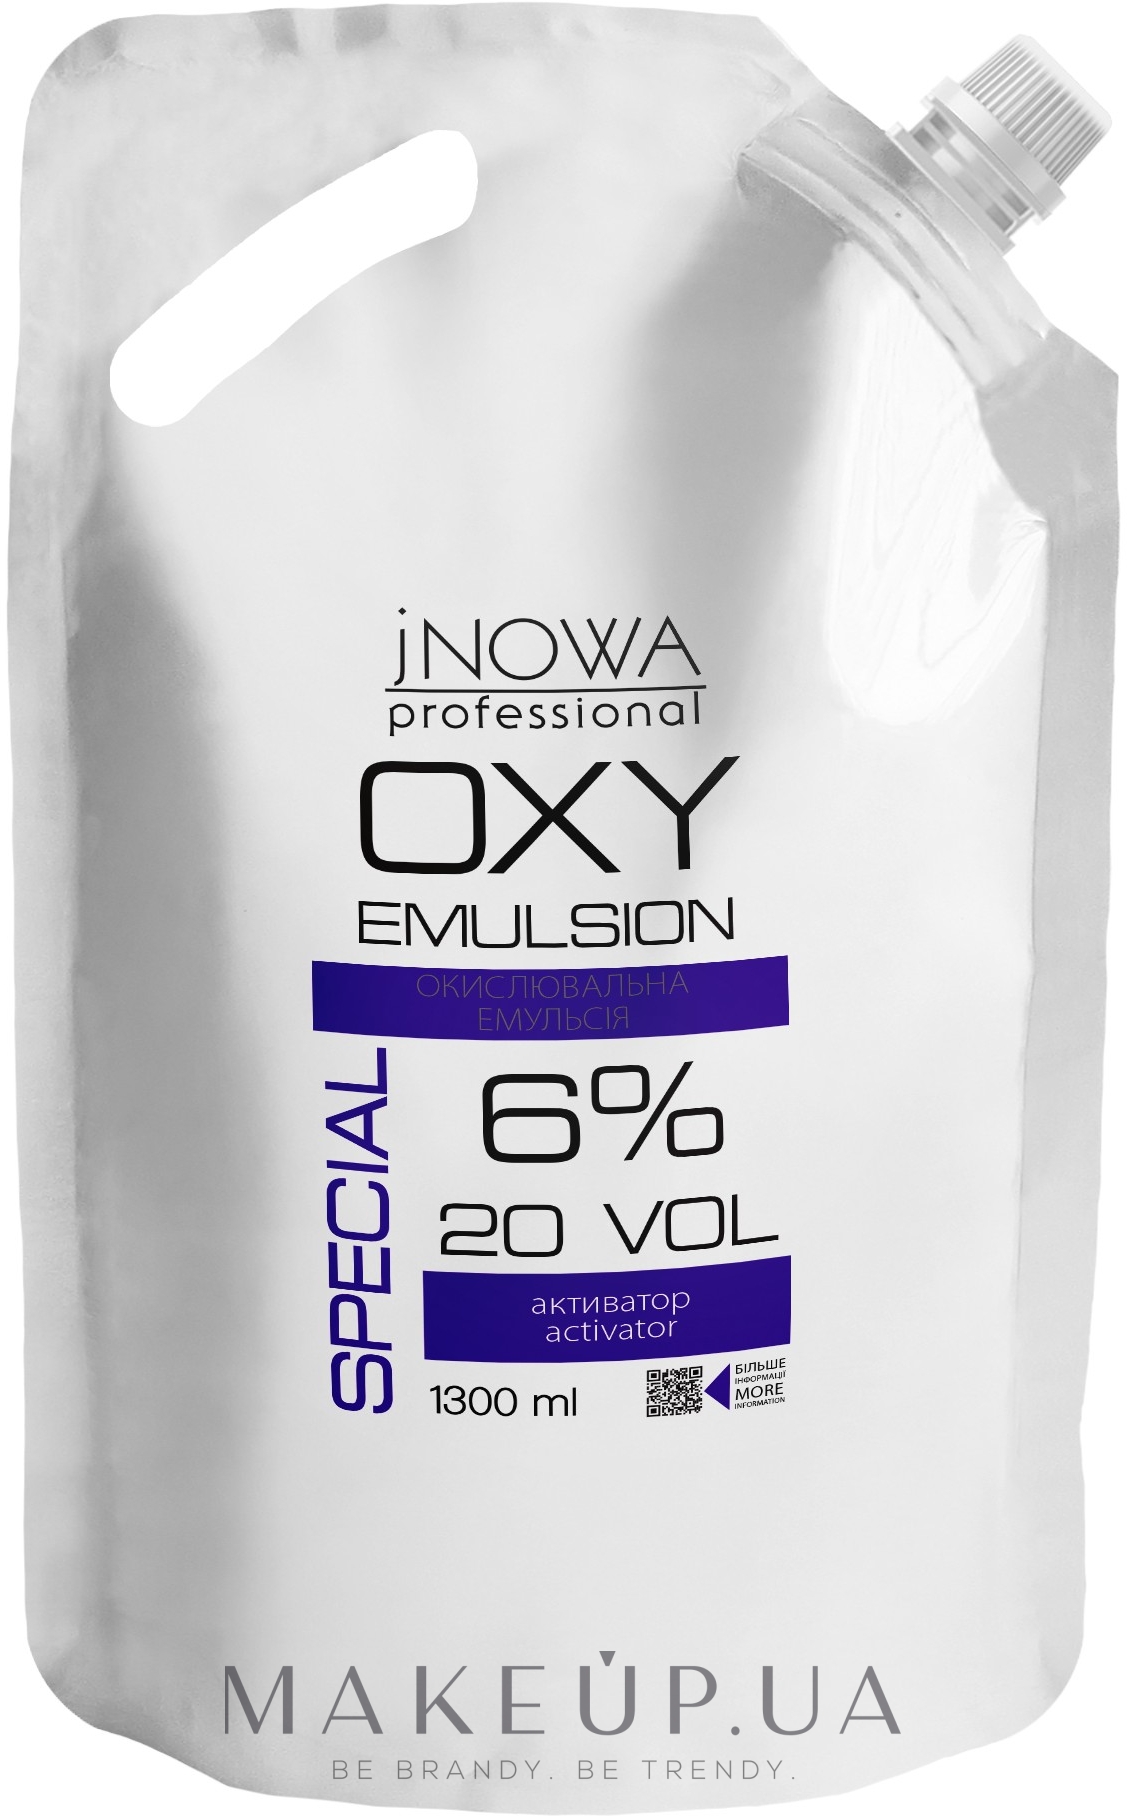 Окислювальна емульсія 6% - jNOWA Professional OXY Emulsion Special 20 vol (дой-пак) — фото 1300ml